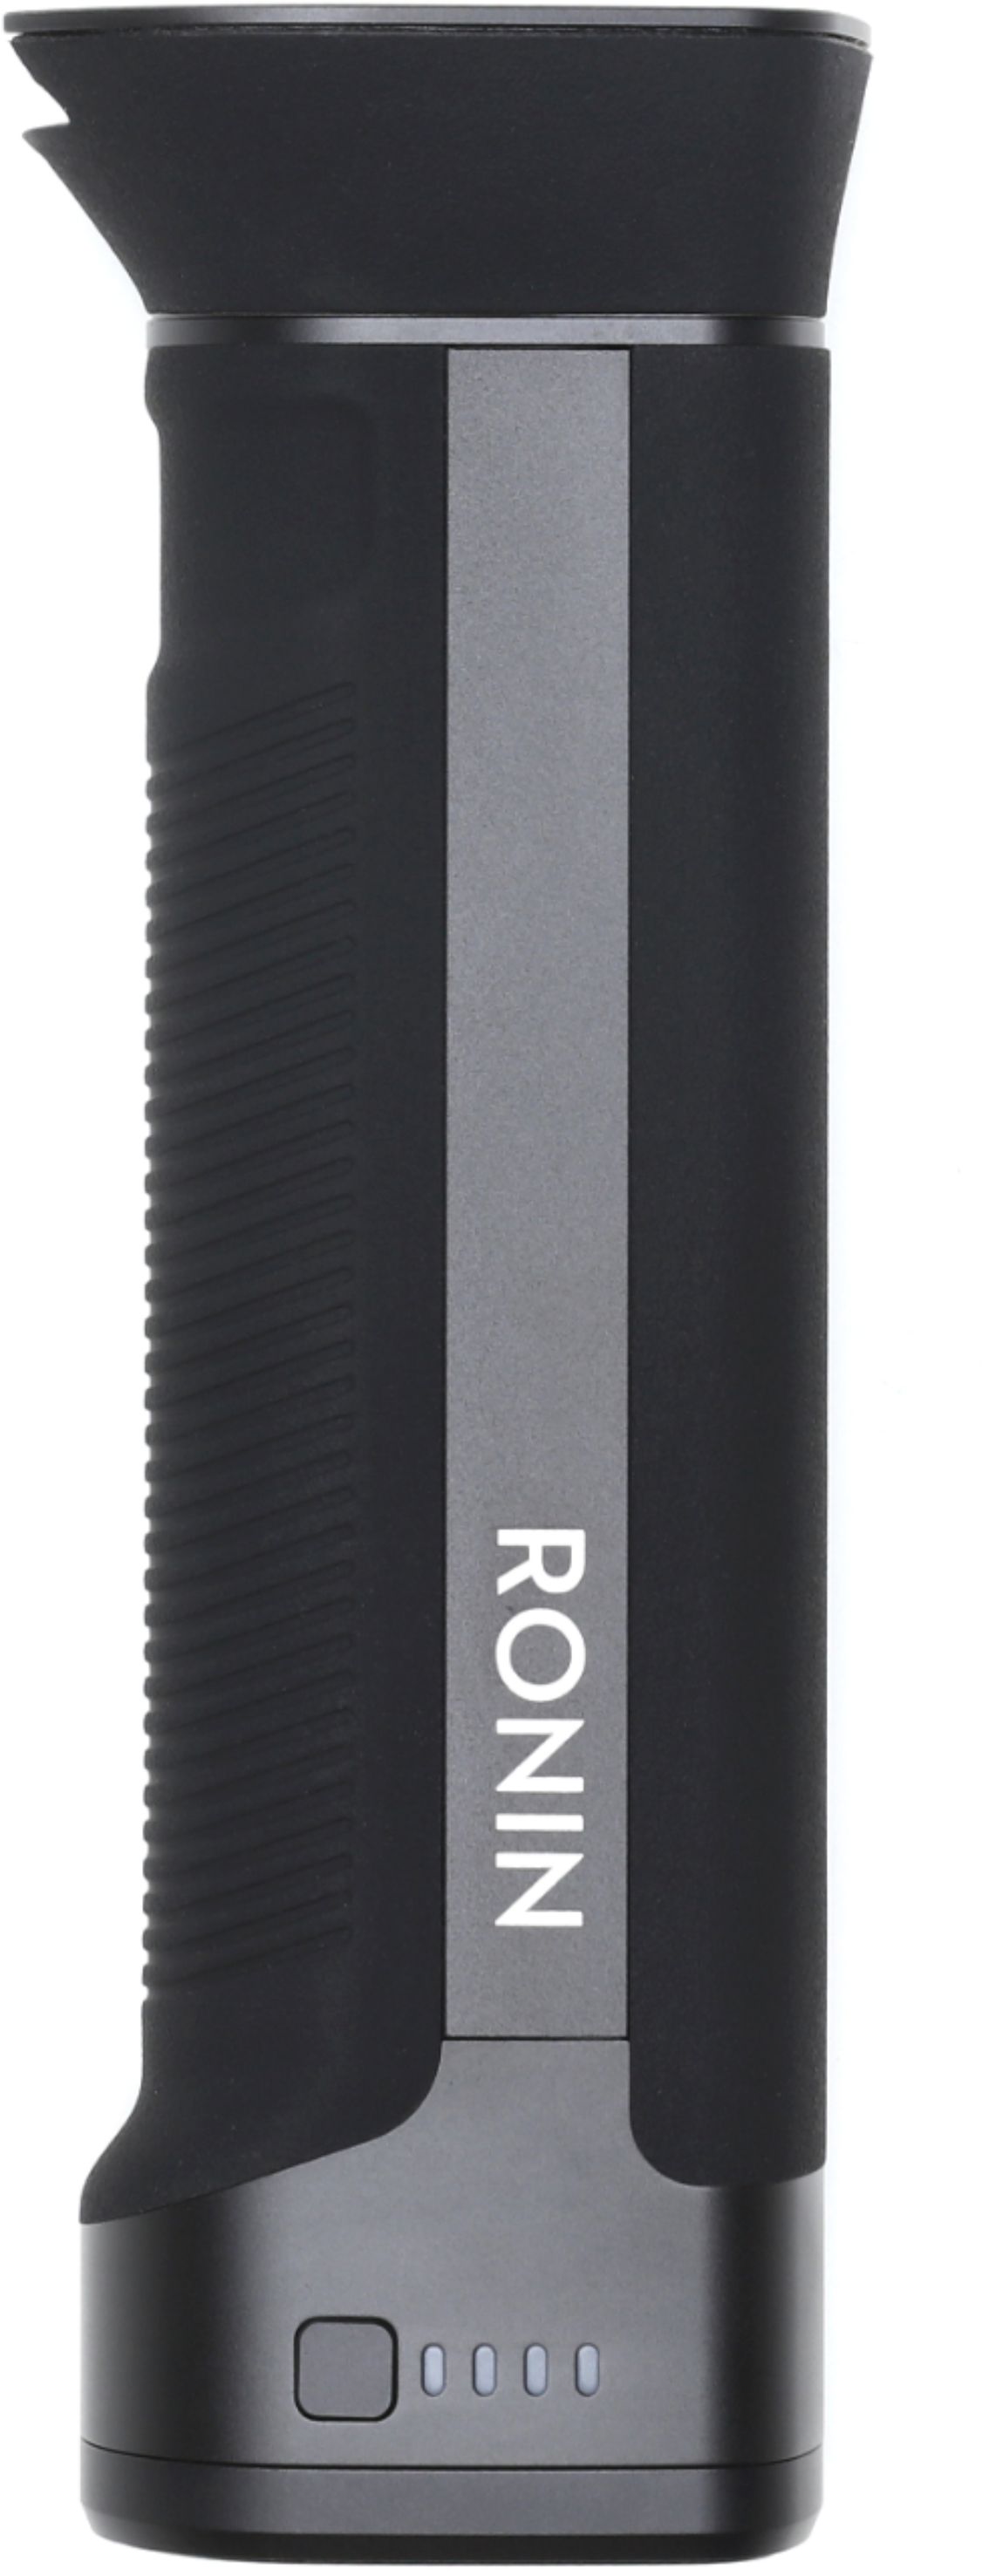 DJI - Ronin-S Battery Grip - Black